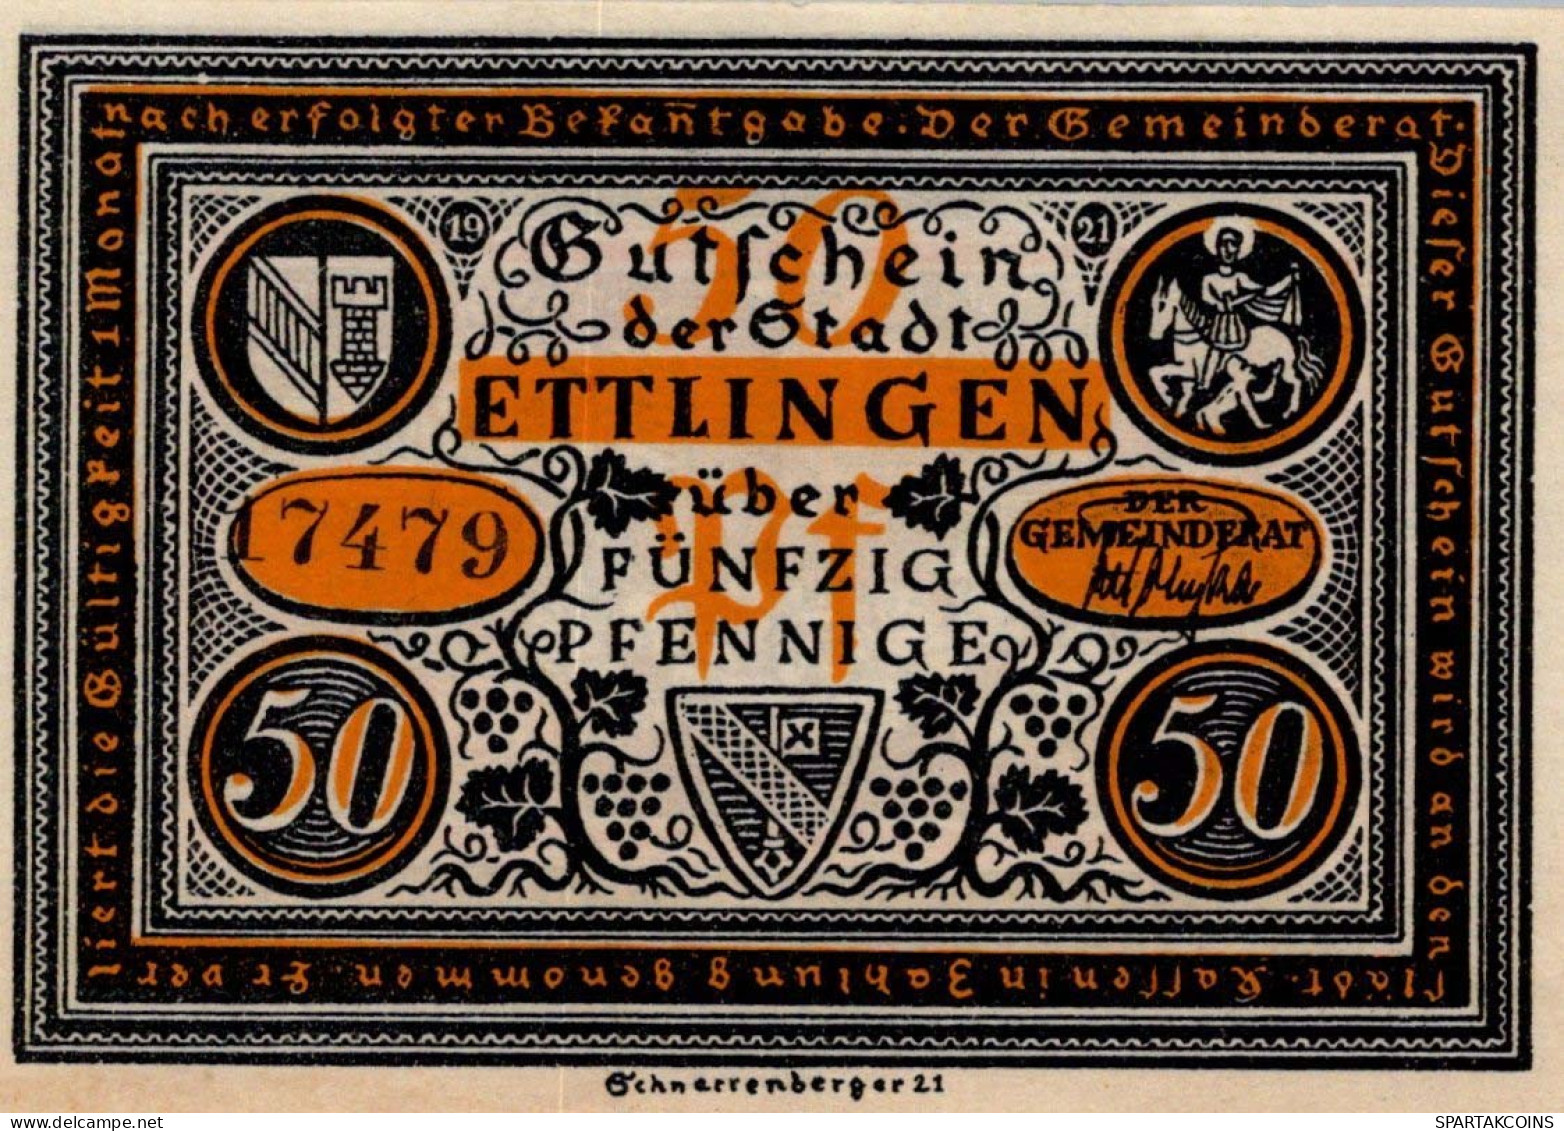 50 PFENNIG 1921 Stadt ETTLINGEN Baden UNC DEUTSCHLAND Notgeld Banknote #PB366 - [11] Local Banknote Issues